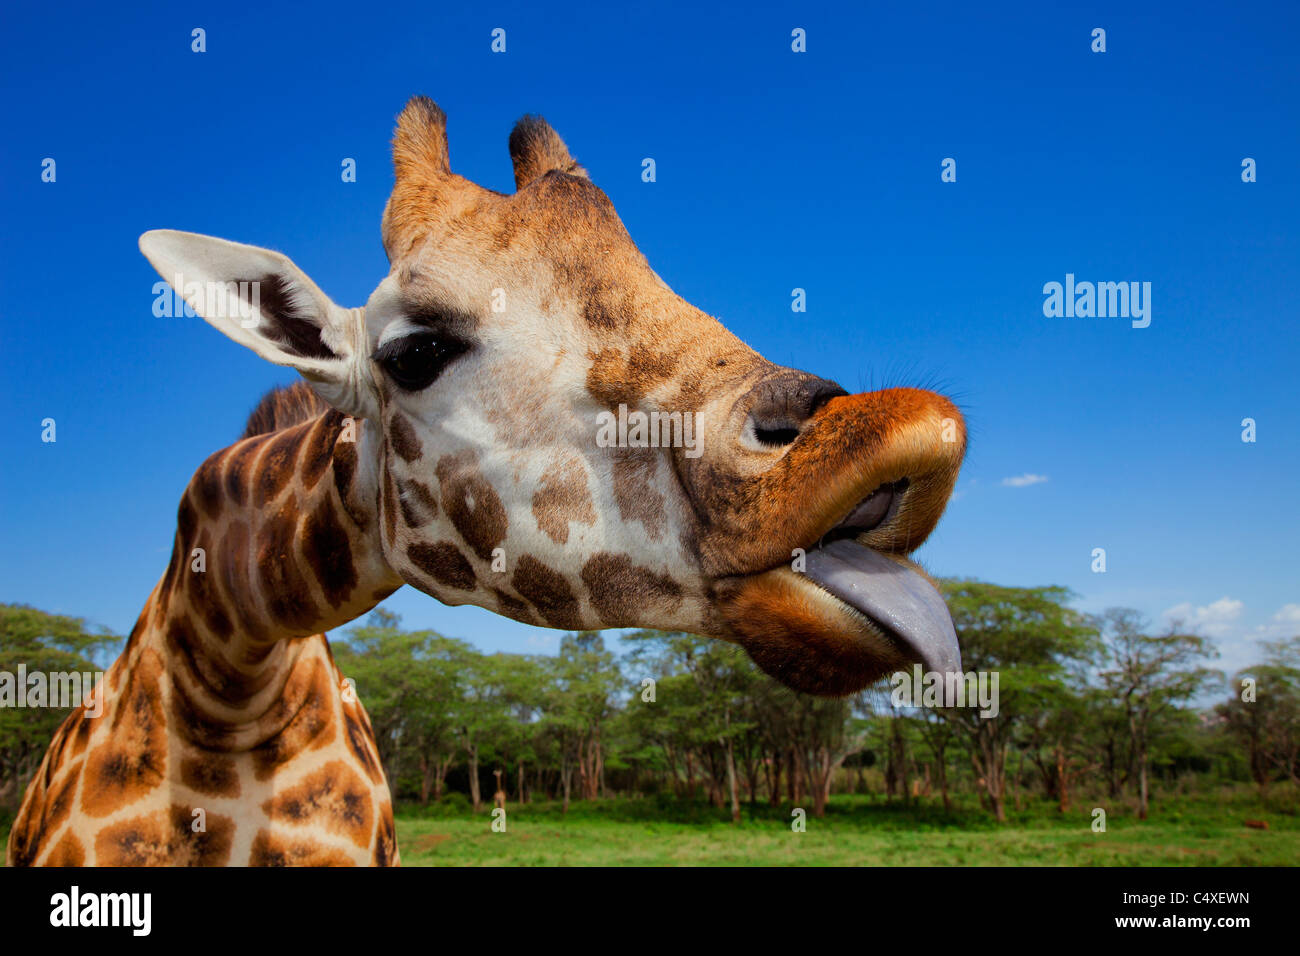 Rothschild Giraffe (Giraffa camelopardalis rothschildi) Is one of 9 subspecies of giraffe.Giraffe Manor Kenya. Dist. East Africa Stock Photo